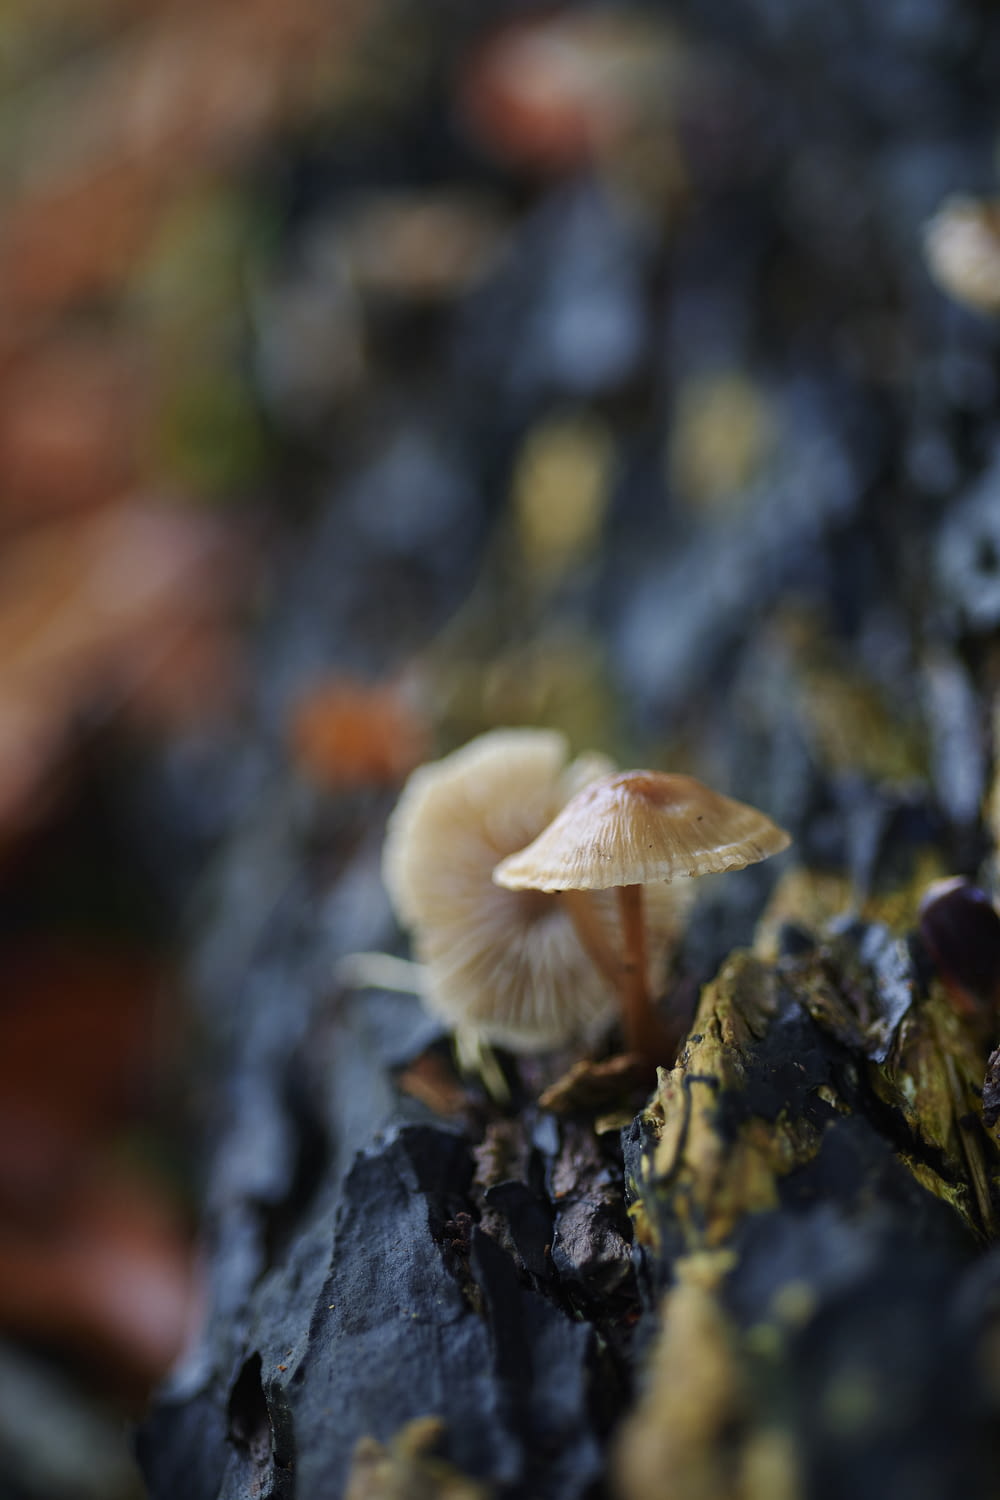 a close up of a mushroom on a rock